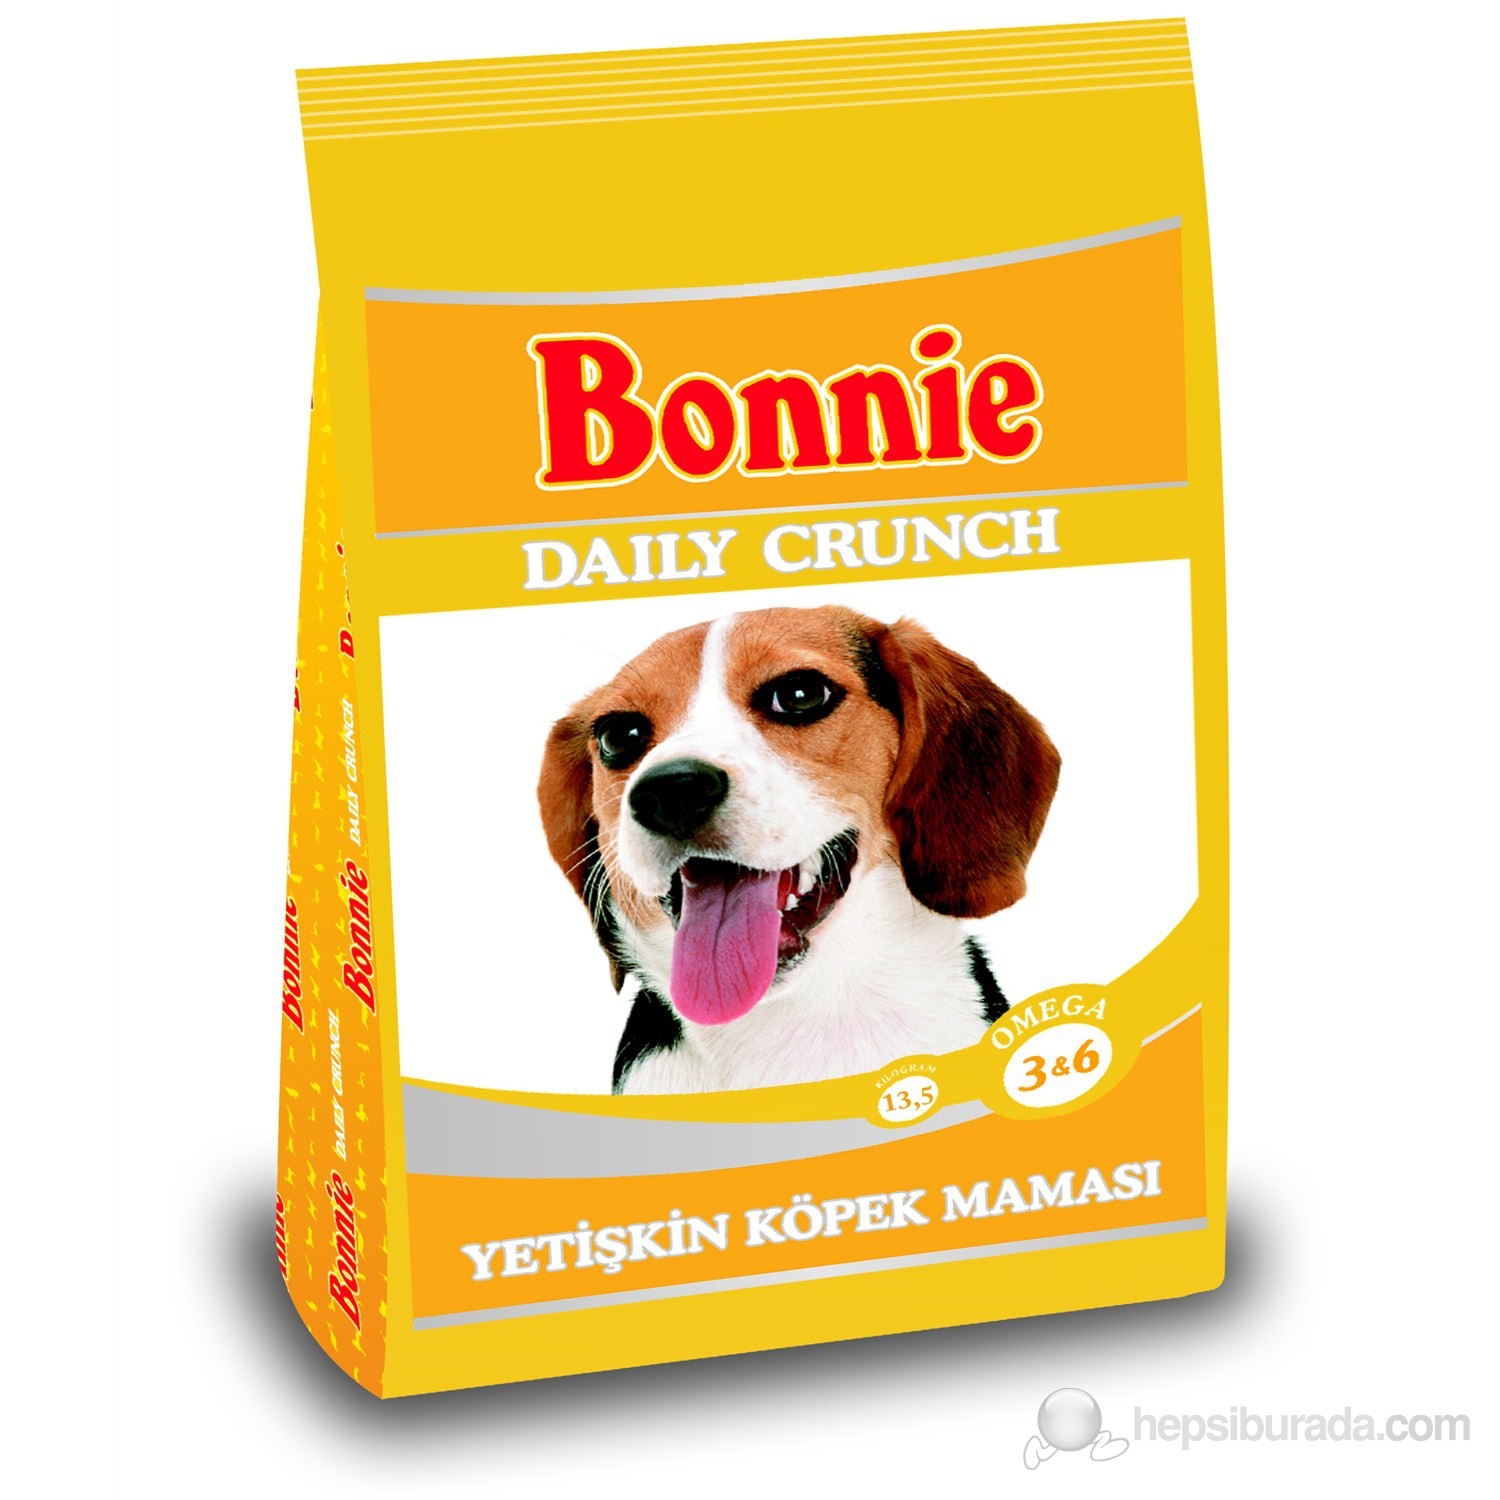 Bonnie Daily Crunch Yetiskin Kopek Yorumlari